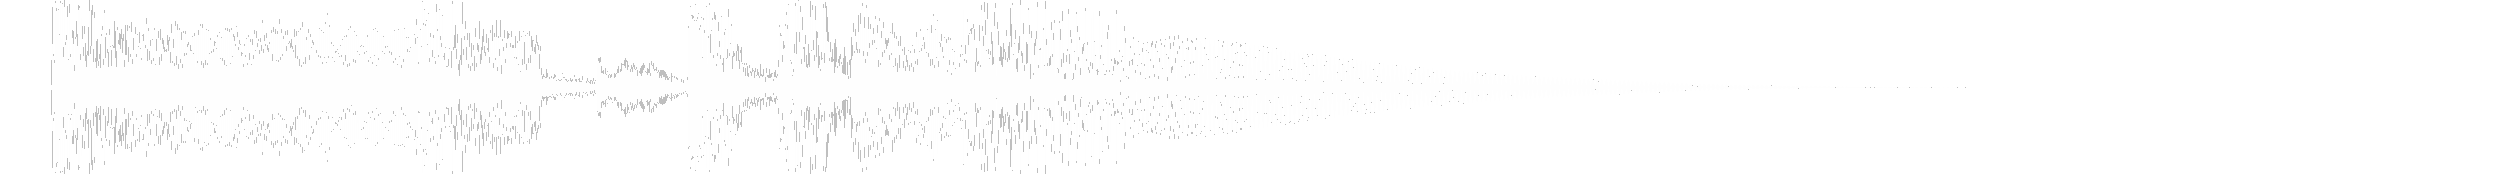 Waveform